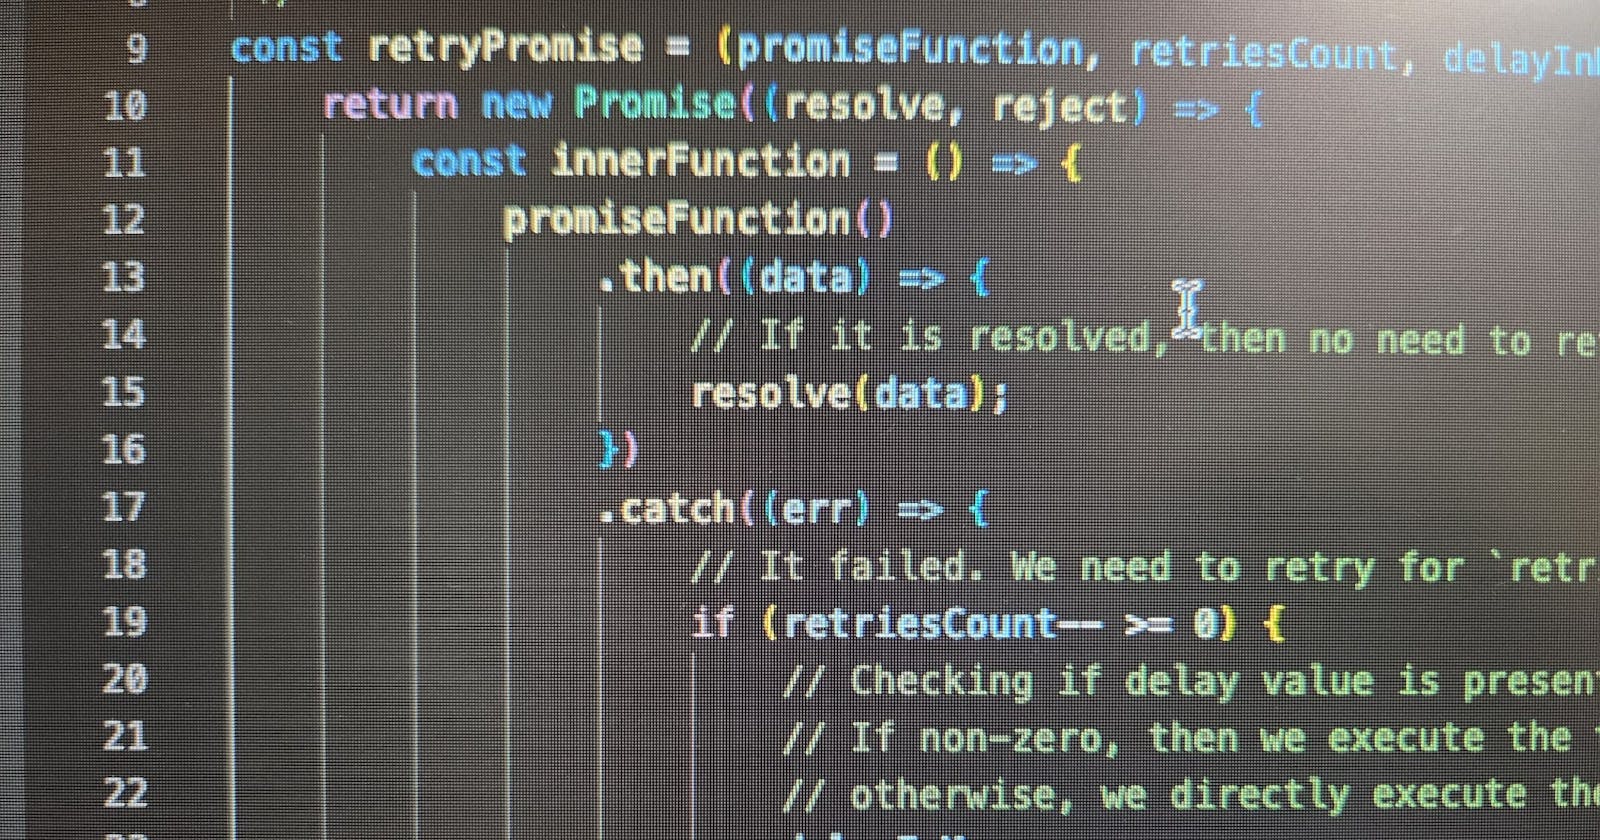 Retry failed promises using JavaScript